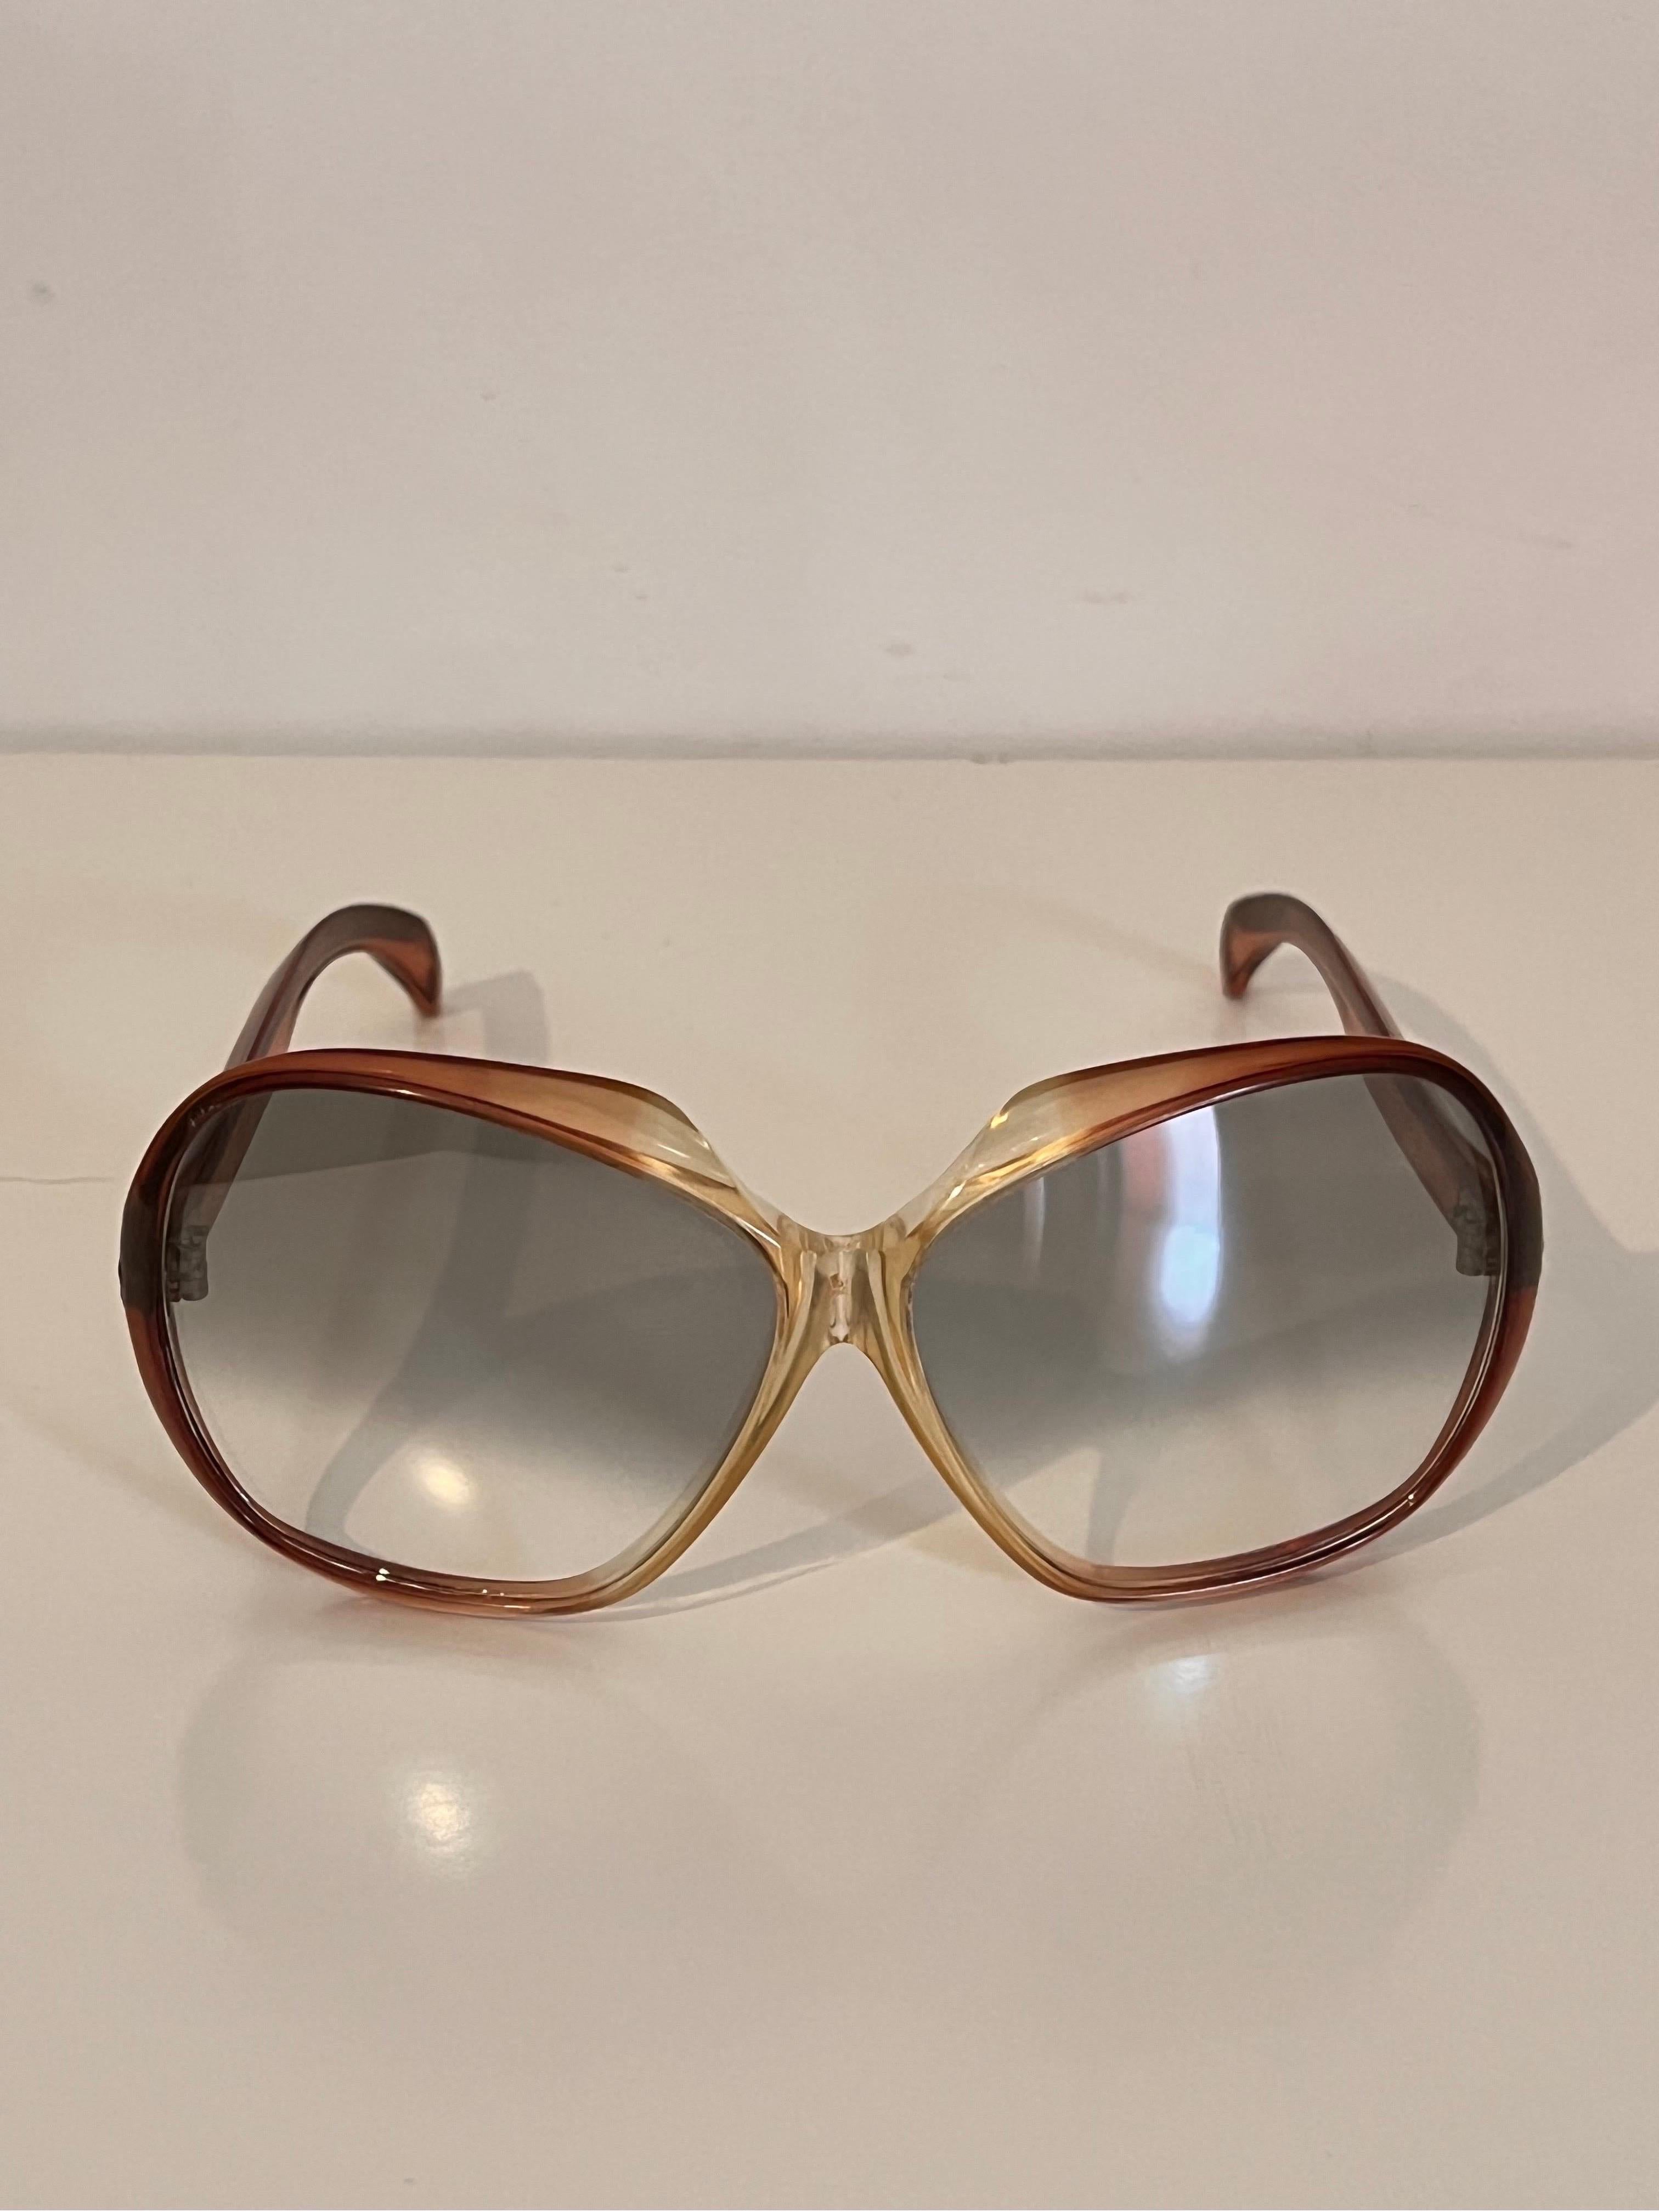 Vintage 1970’s Polaroid sunglasses with graduated tinted lense 1